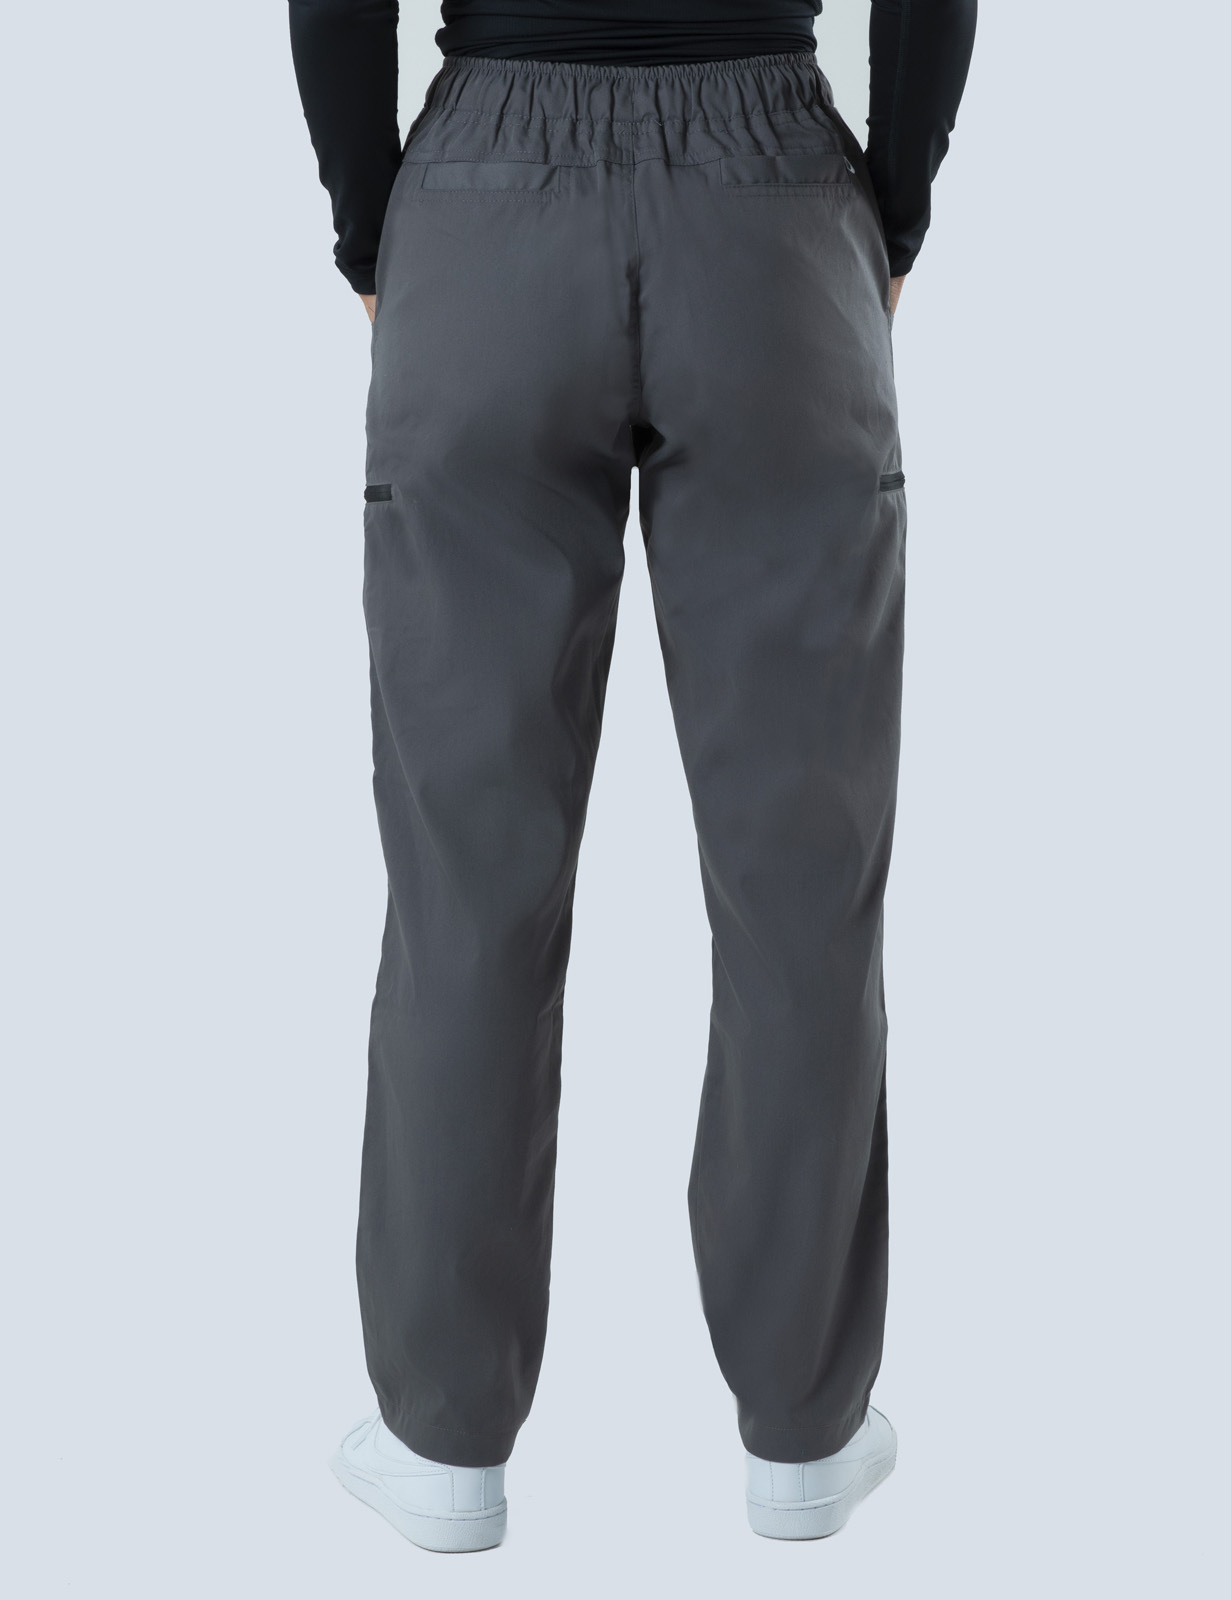 Women's Utility Pants - Steel Grey - Large - Tall - 0